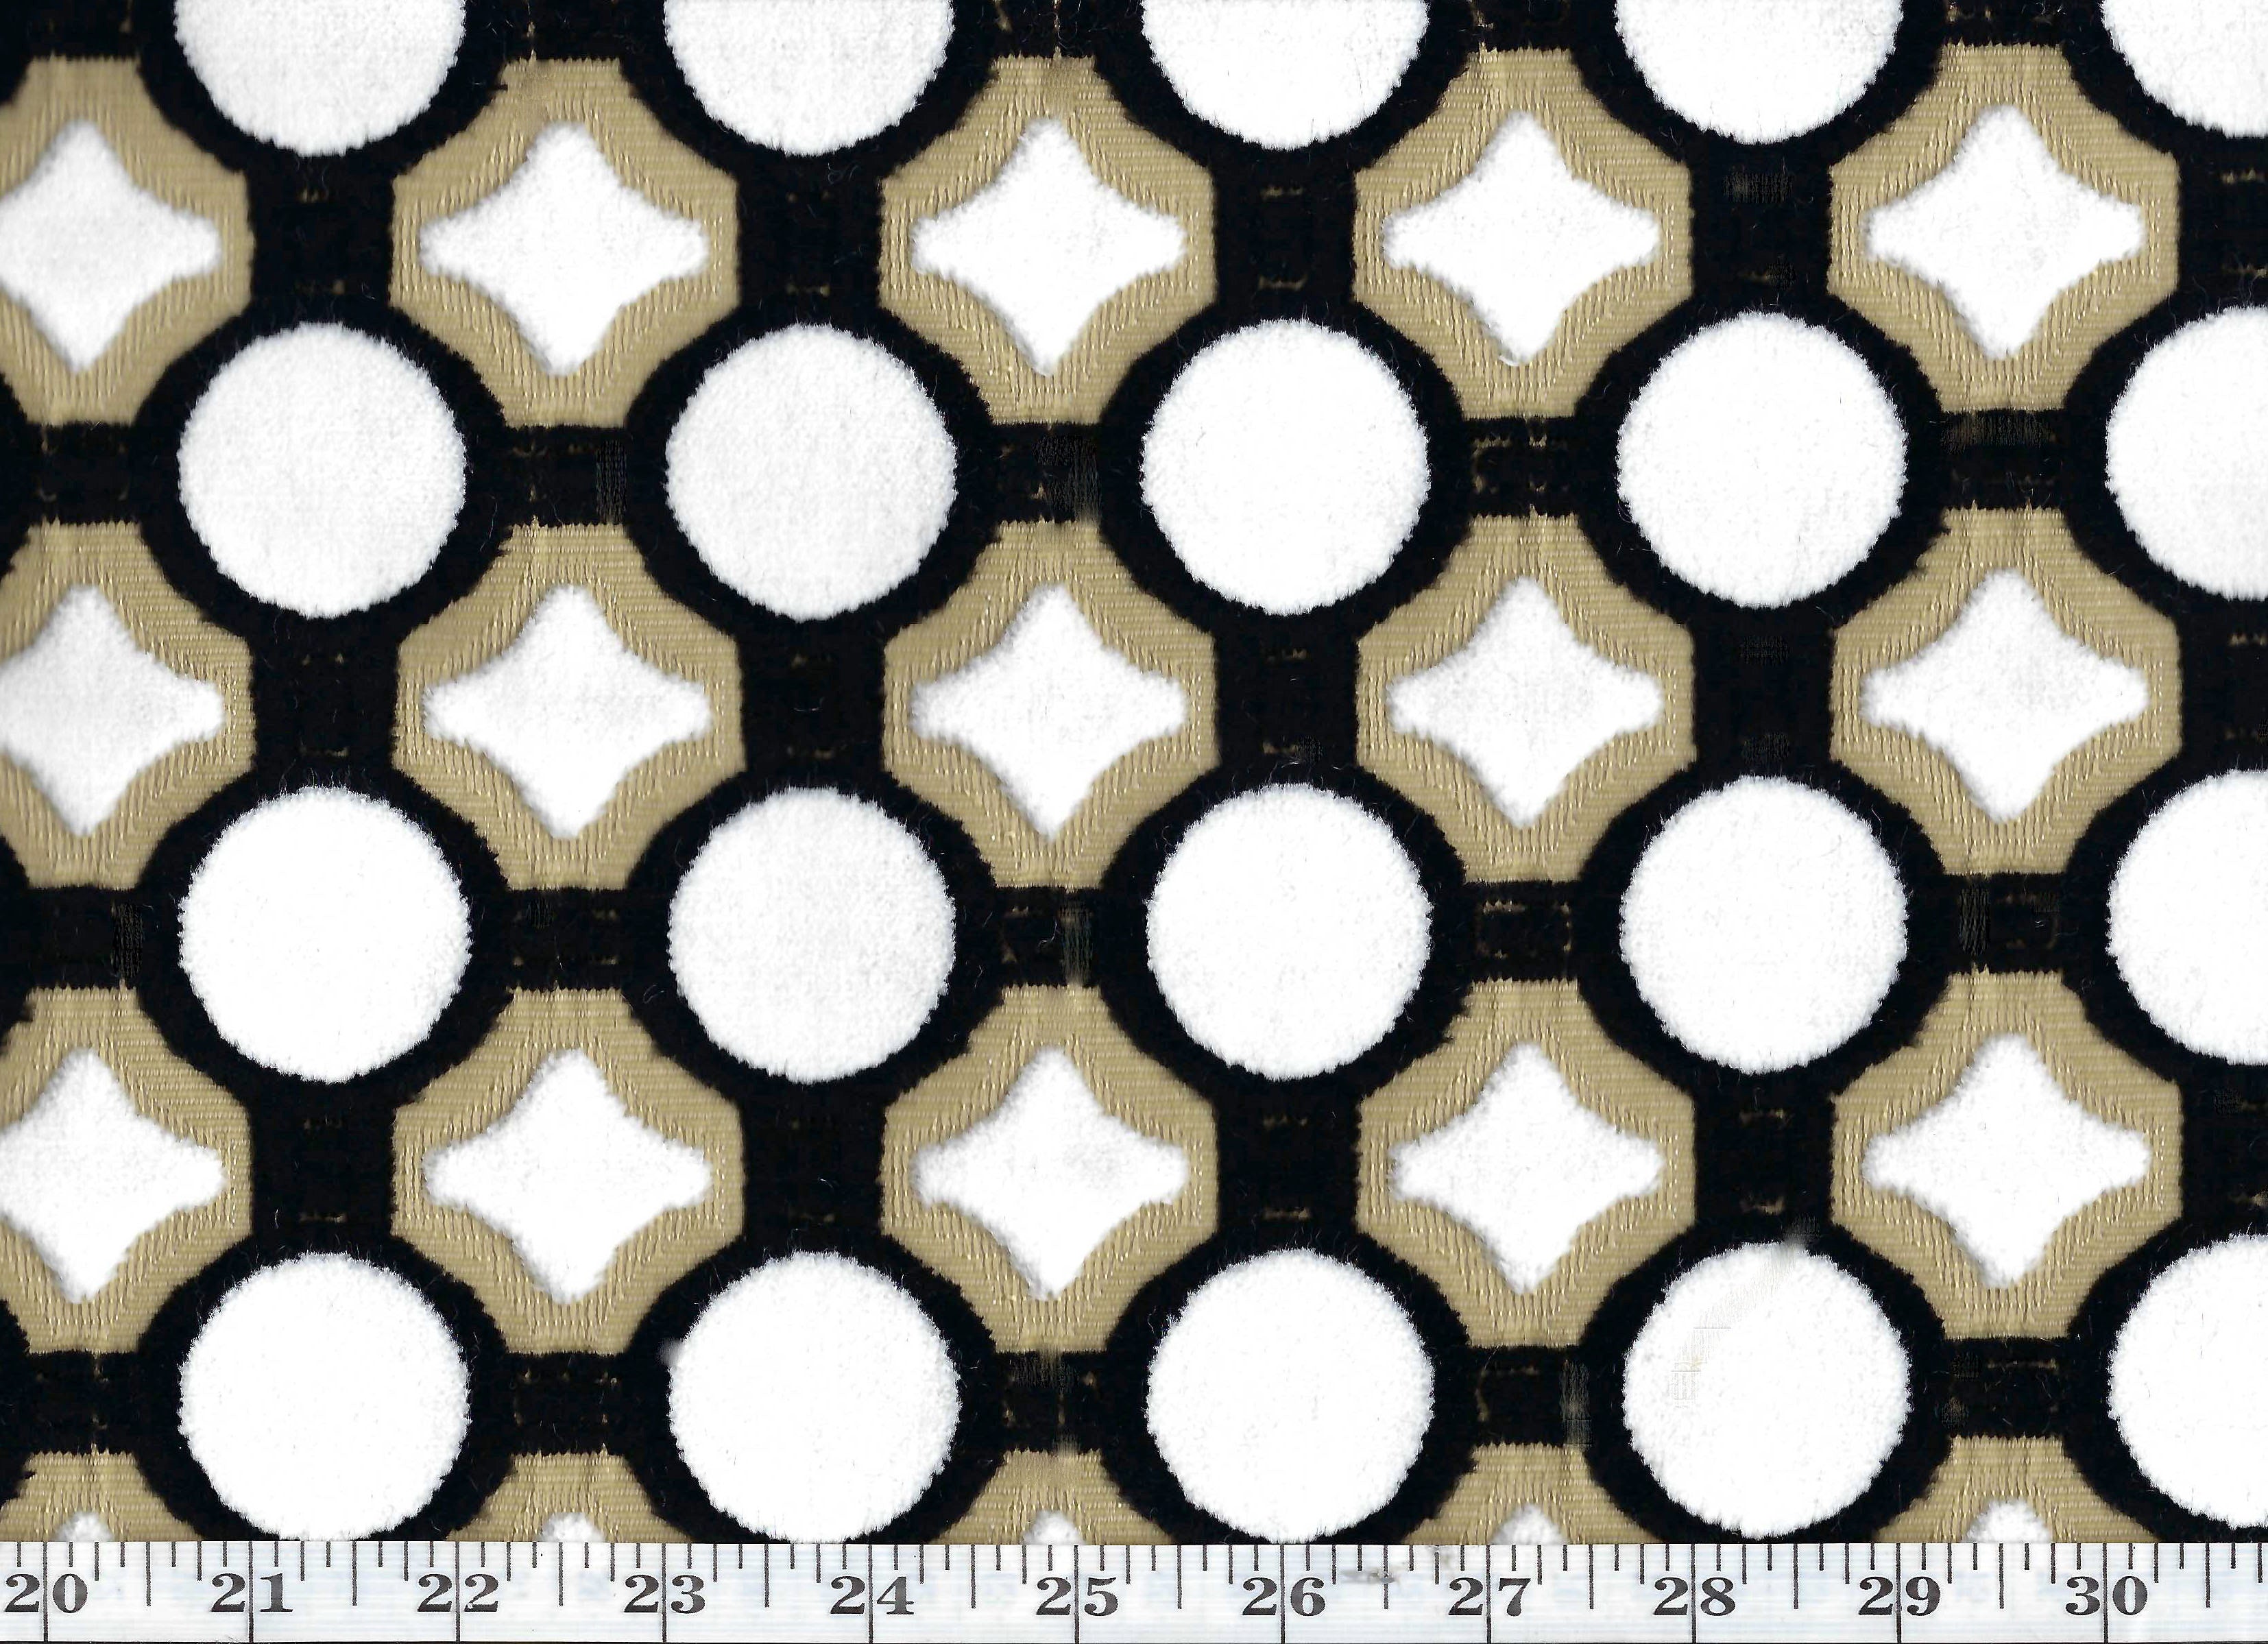 Zoe CL Teal Velvet Upholstery Fabric by DeLeo Textiles – OverStock